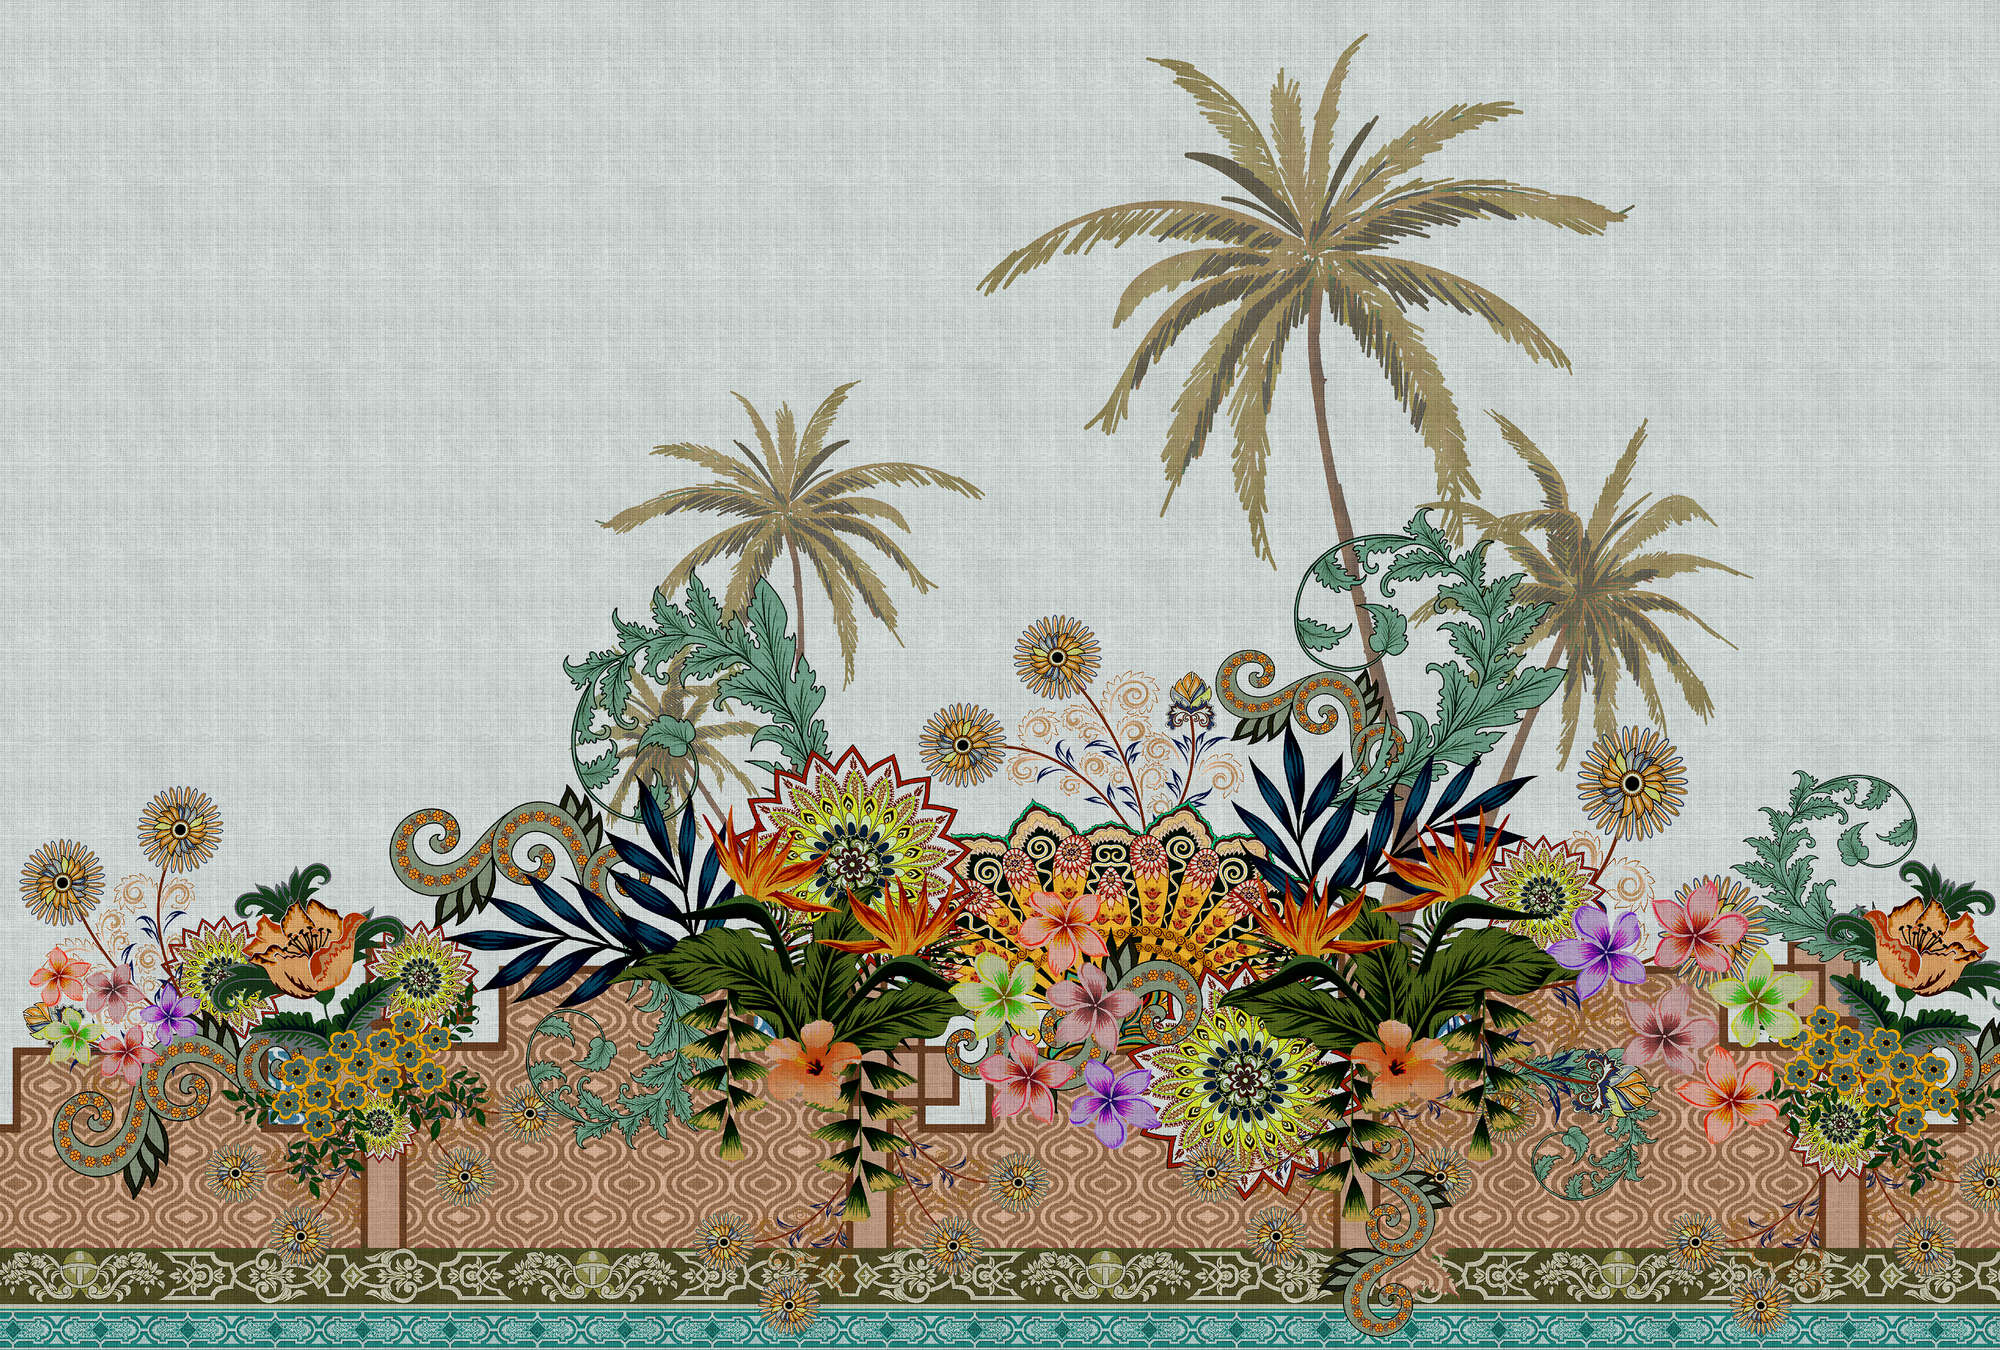             Oriental Garden 3 - wall mural flowers garden India style
        